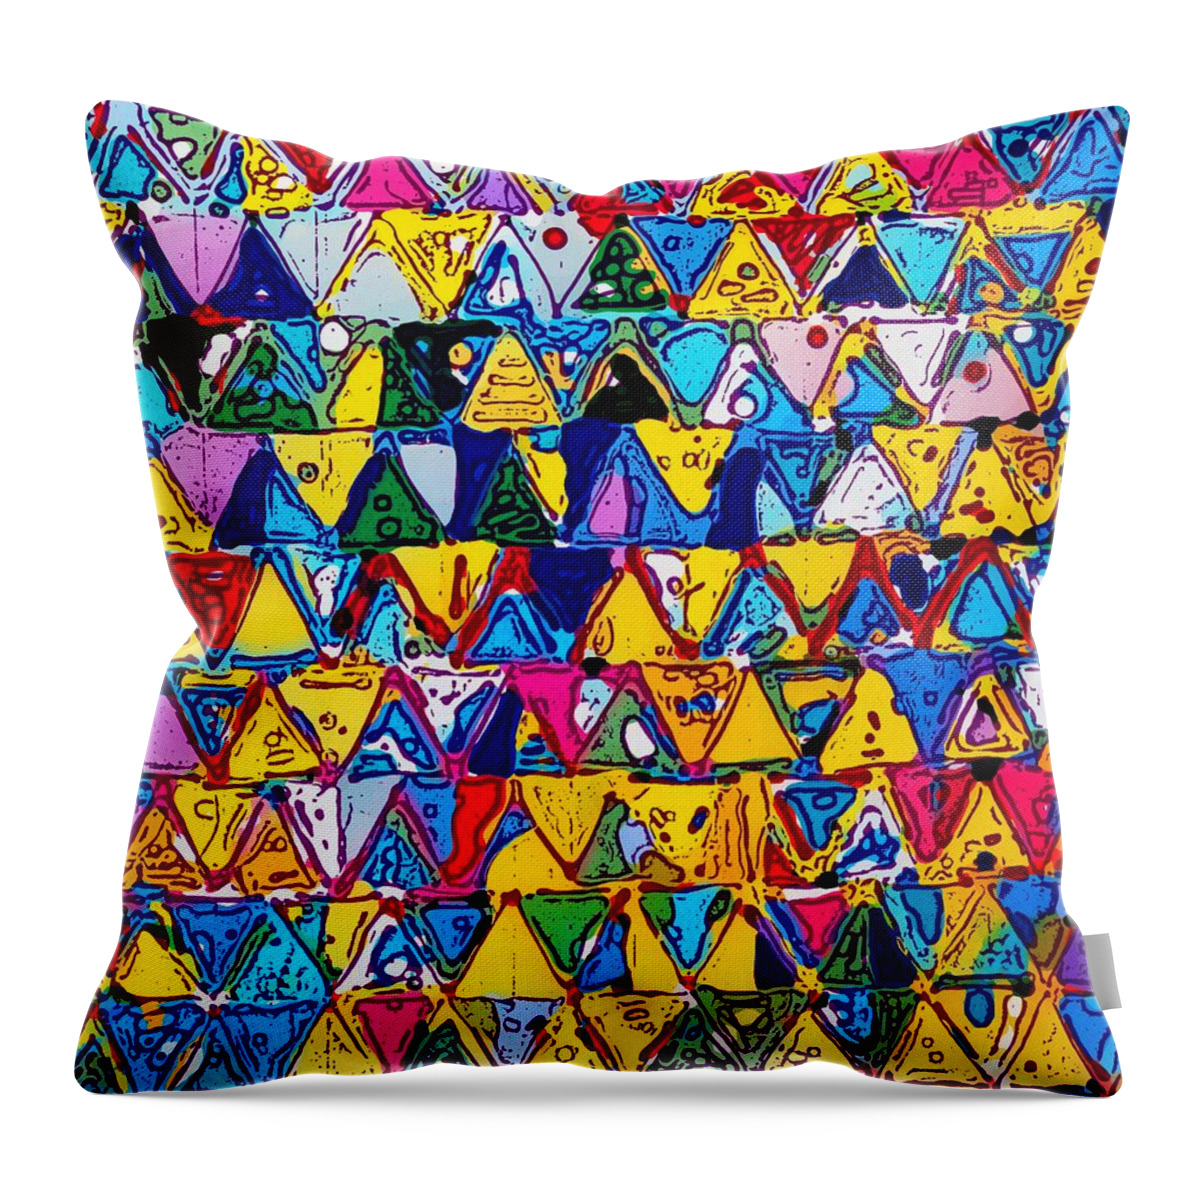 Pyramids Throw Pillow featuring the digital art Pyramids by Joe Roache